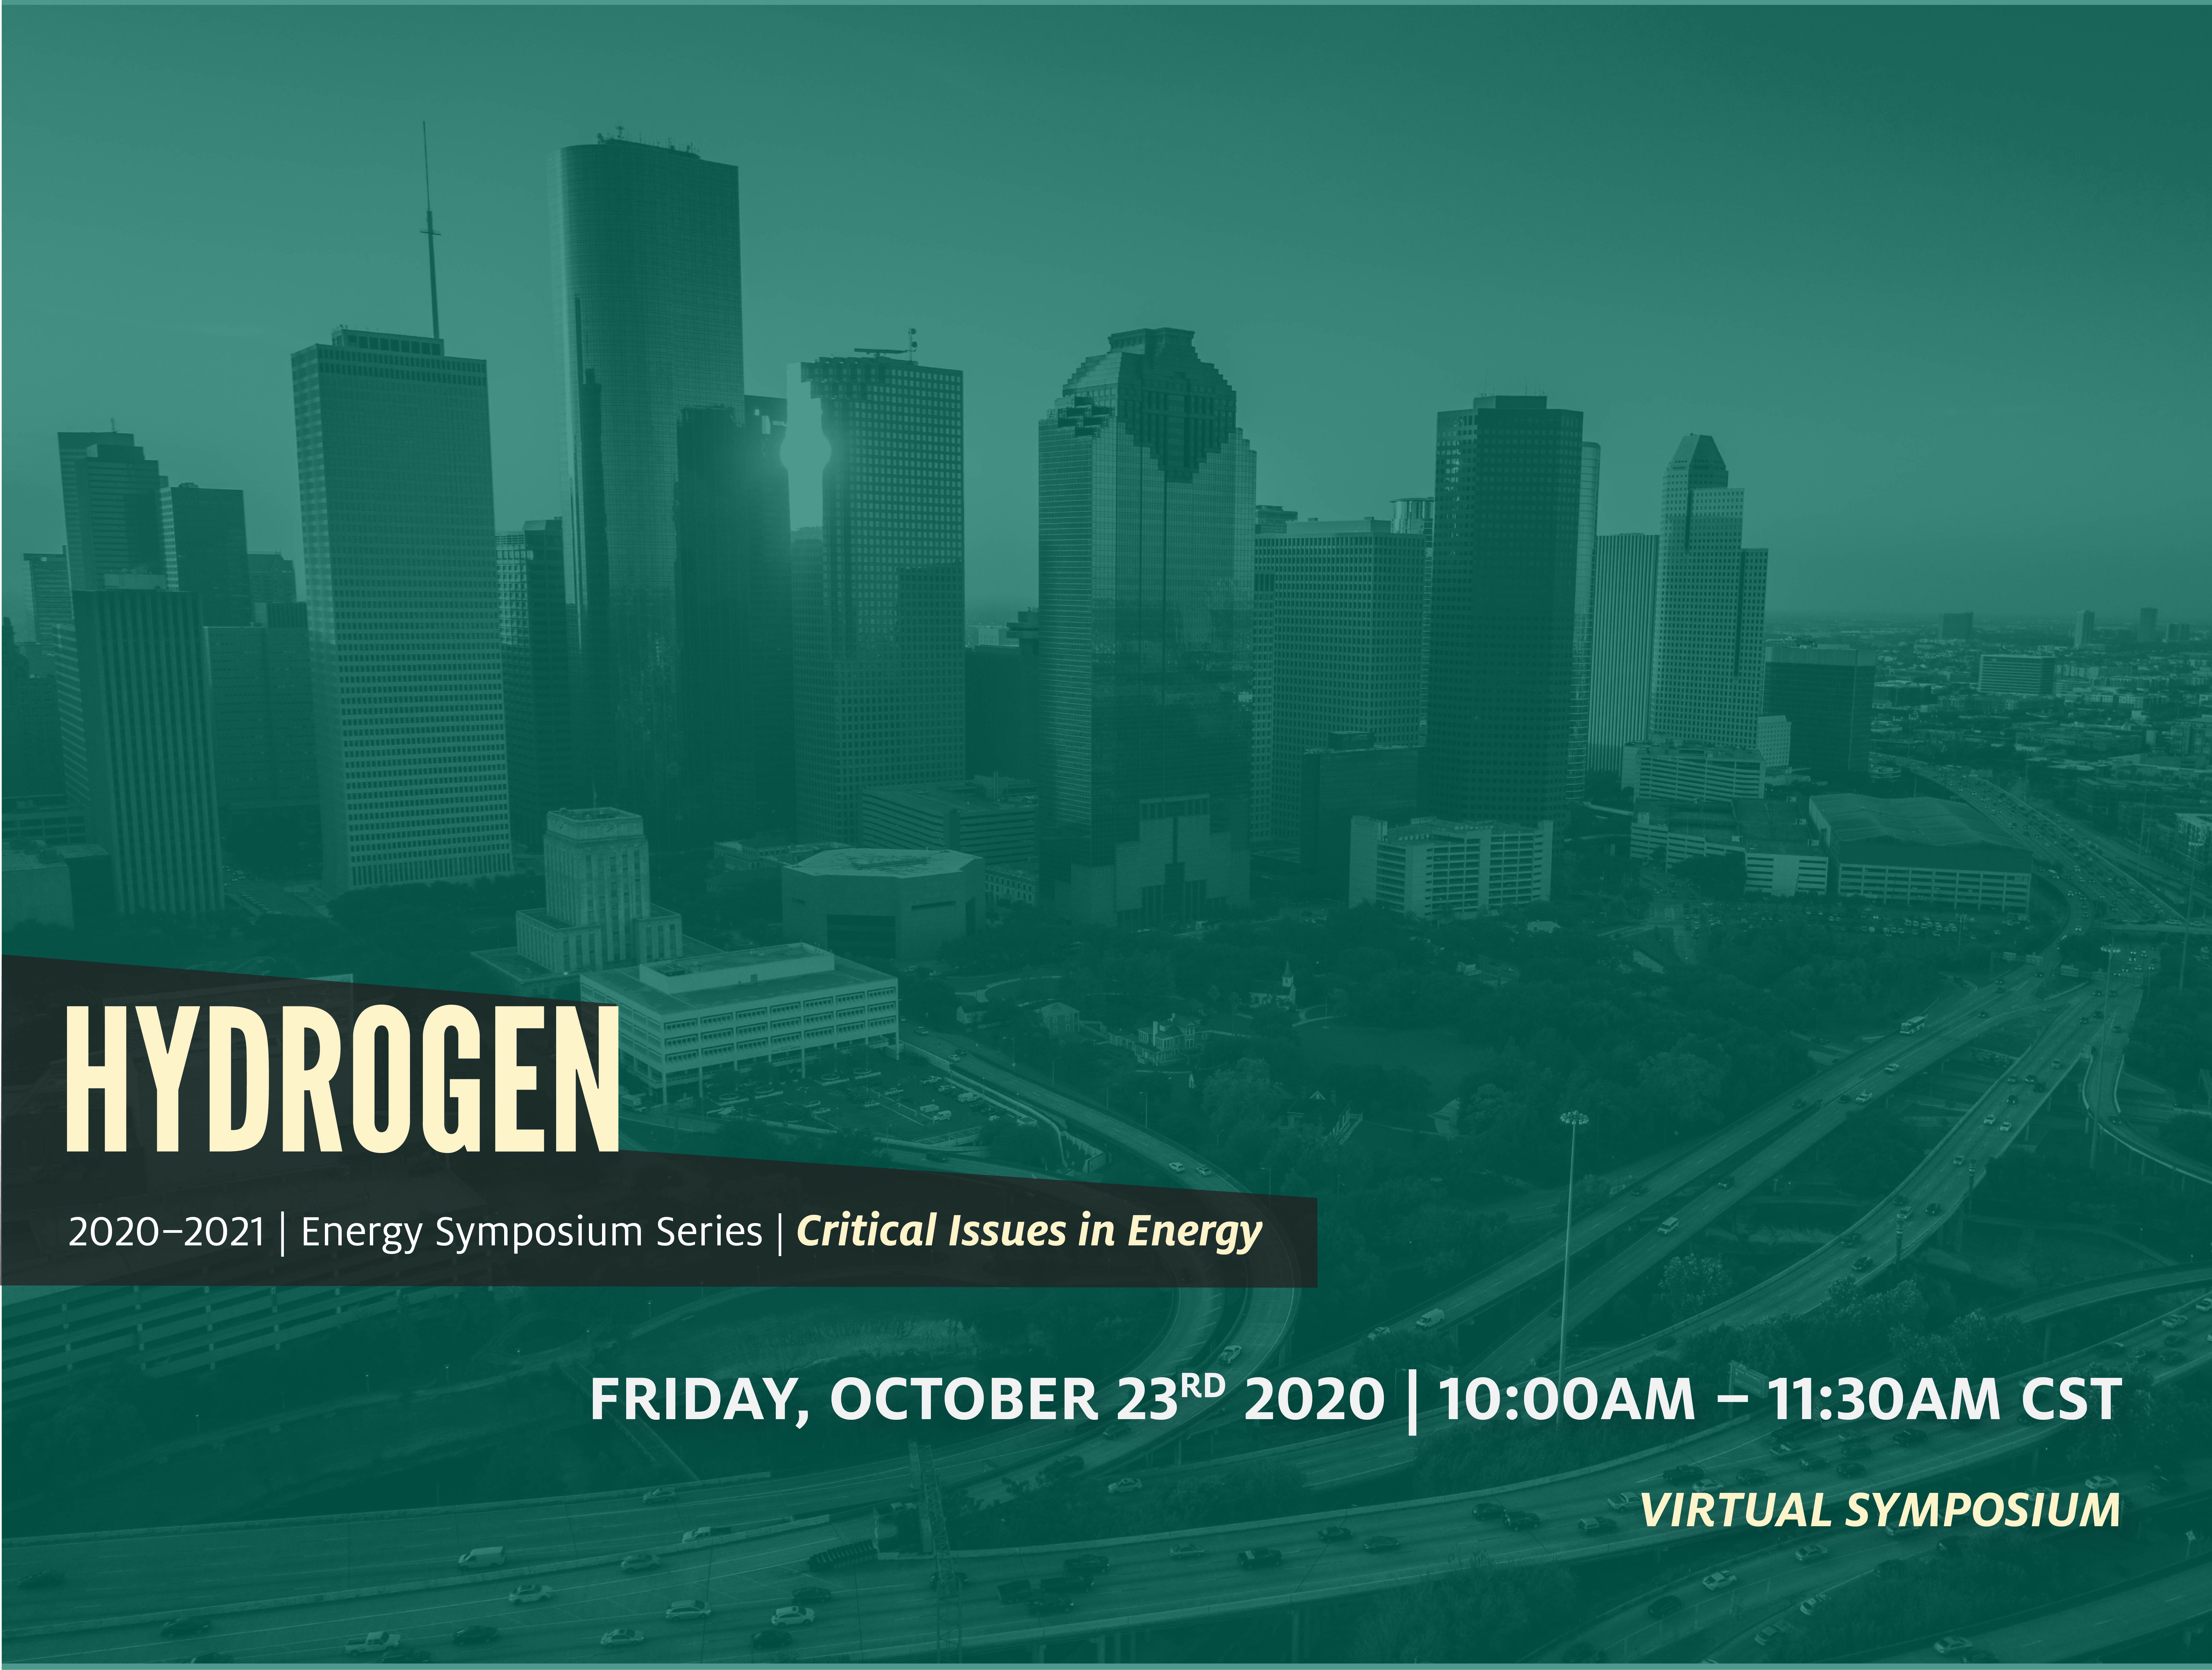 Houston: The Low-Carbon Energy Capital - A Roadmap: Hydrogen